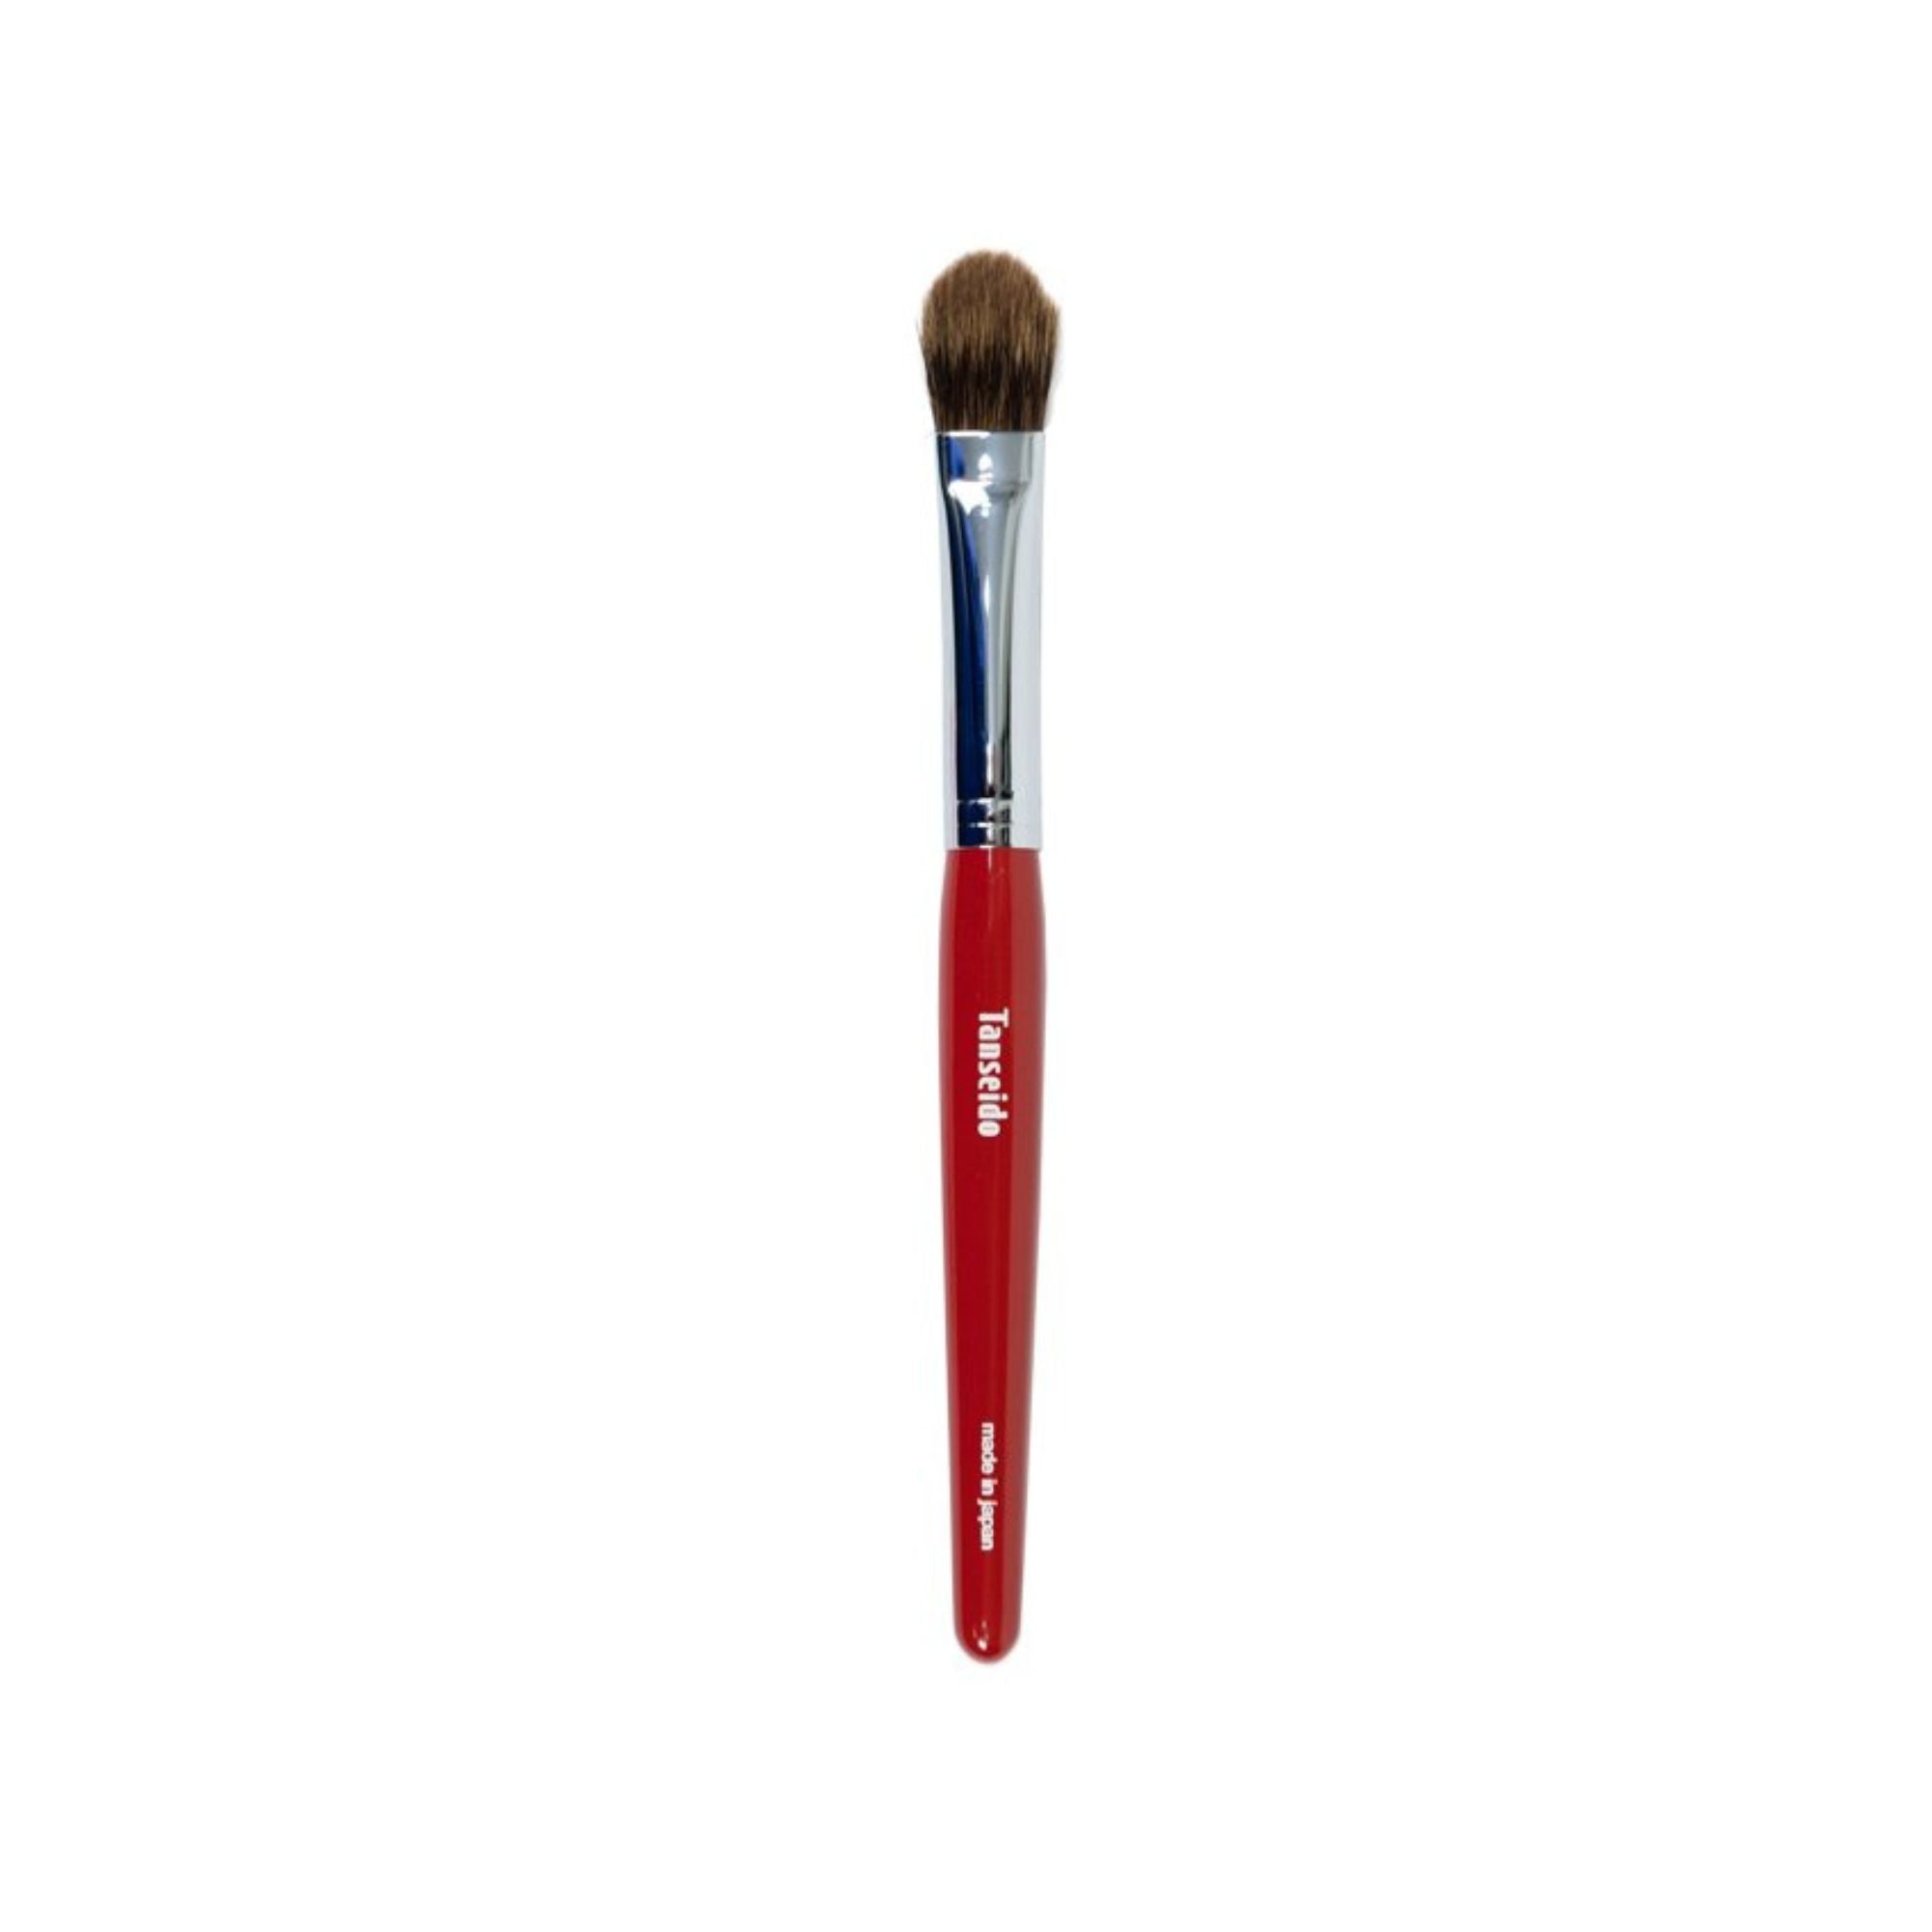 Tanseido CQ 12SP Eyeshadow Brush - Fude Beauty, Japanese Makeup Brushes